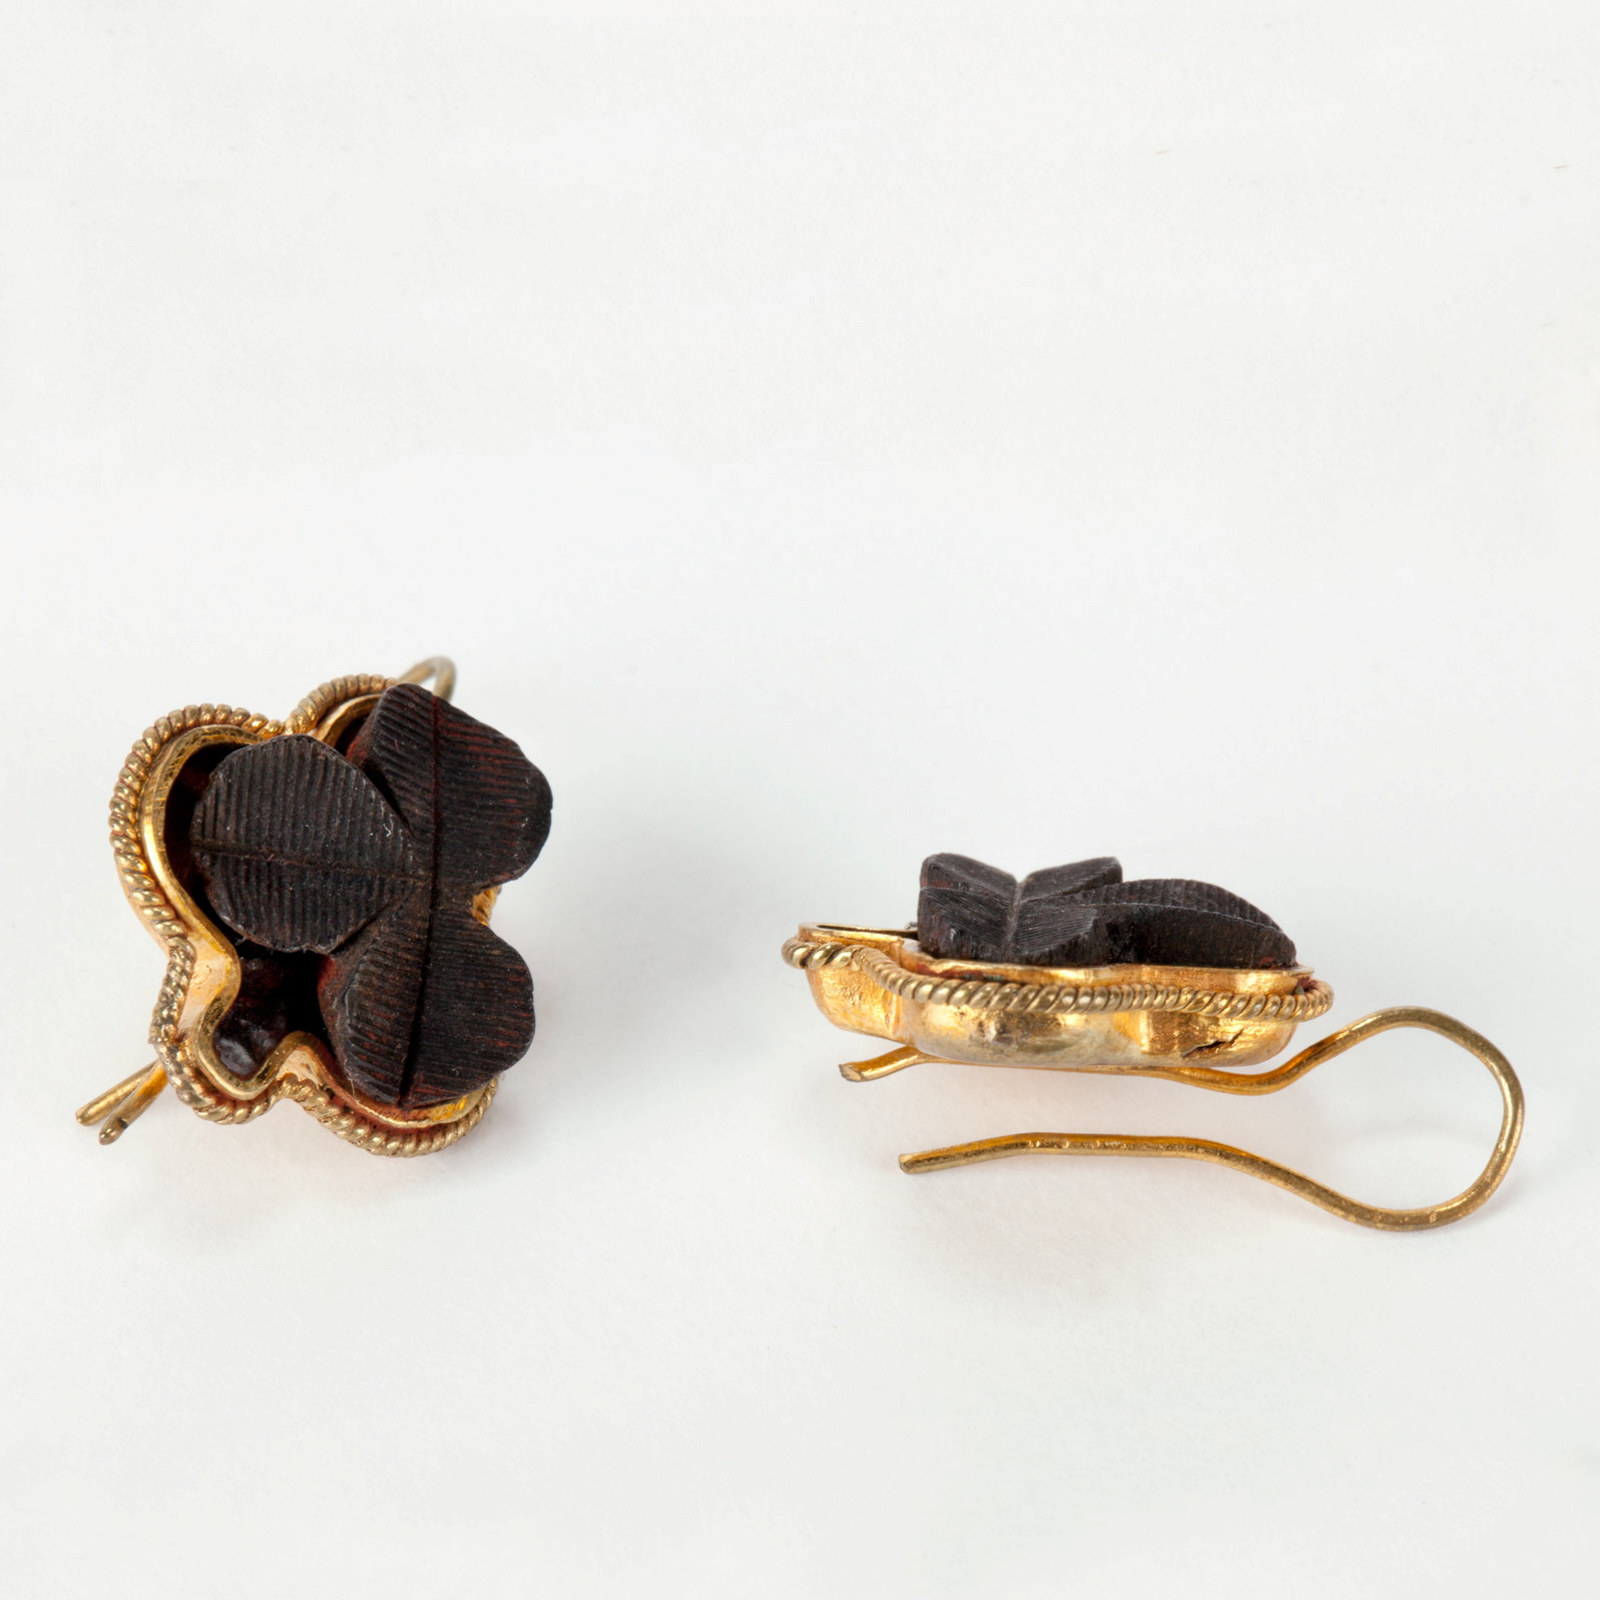 Pair of gold and bog oak earrings designed for pierced ears, 1860s